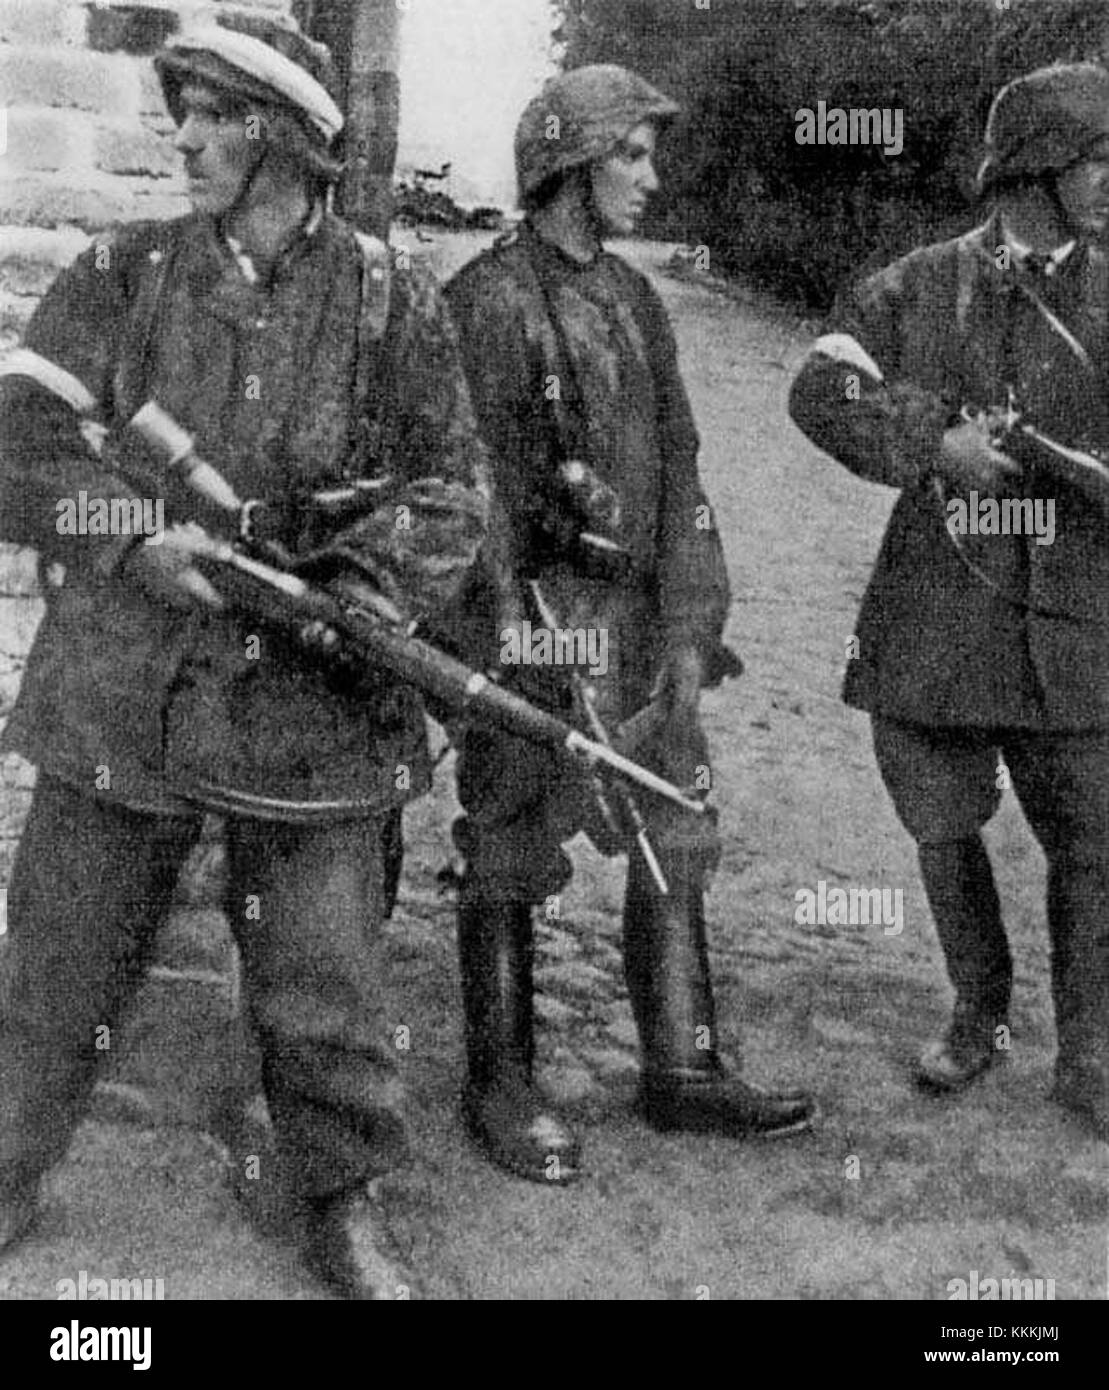 AK-soldiers Parasol Regiment Warsaw Uprising 1944 Stock Photo - Alamy